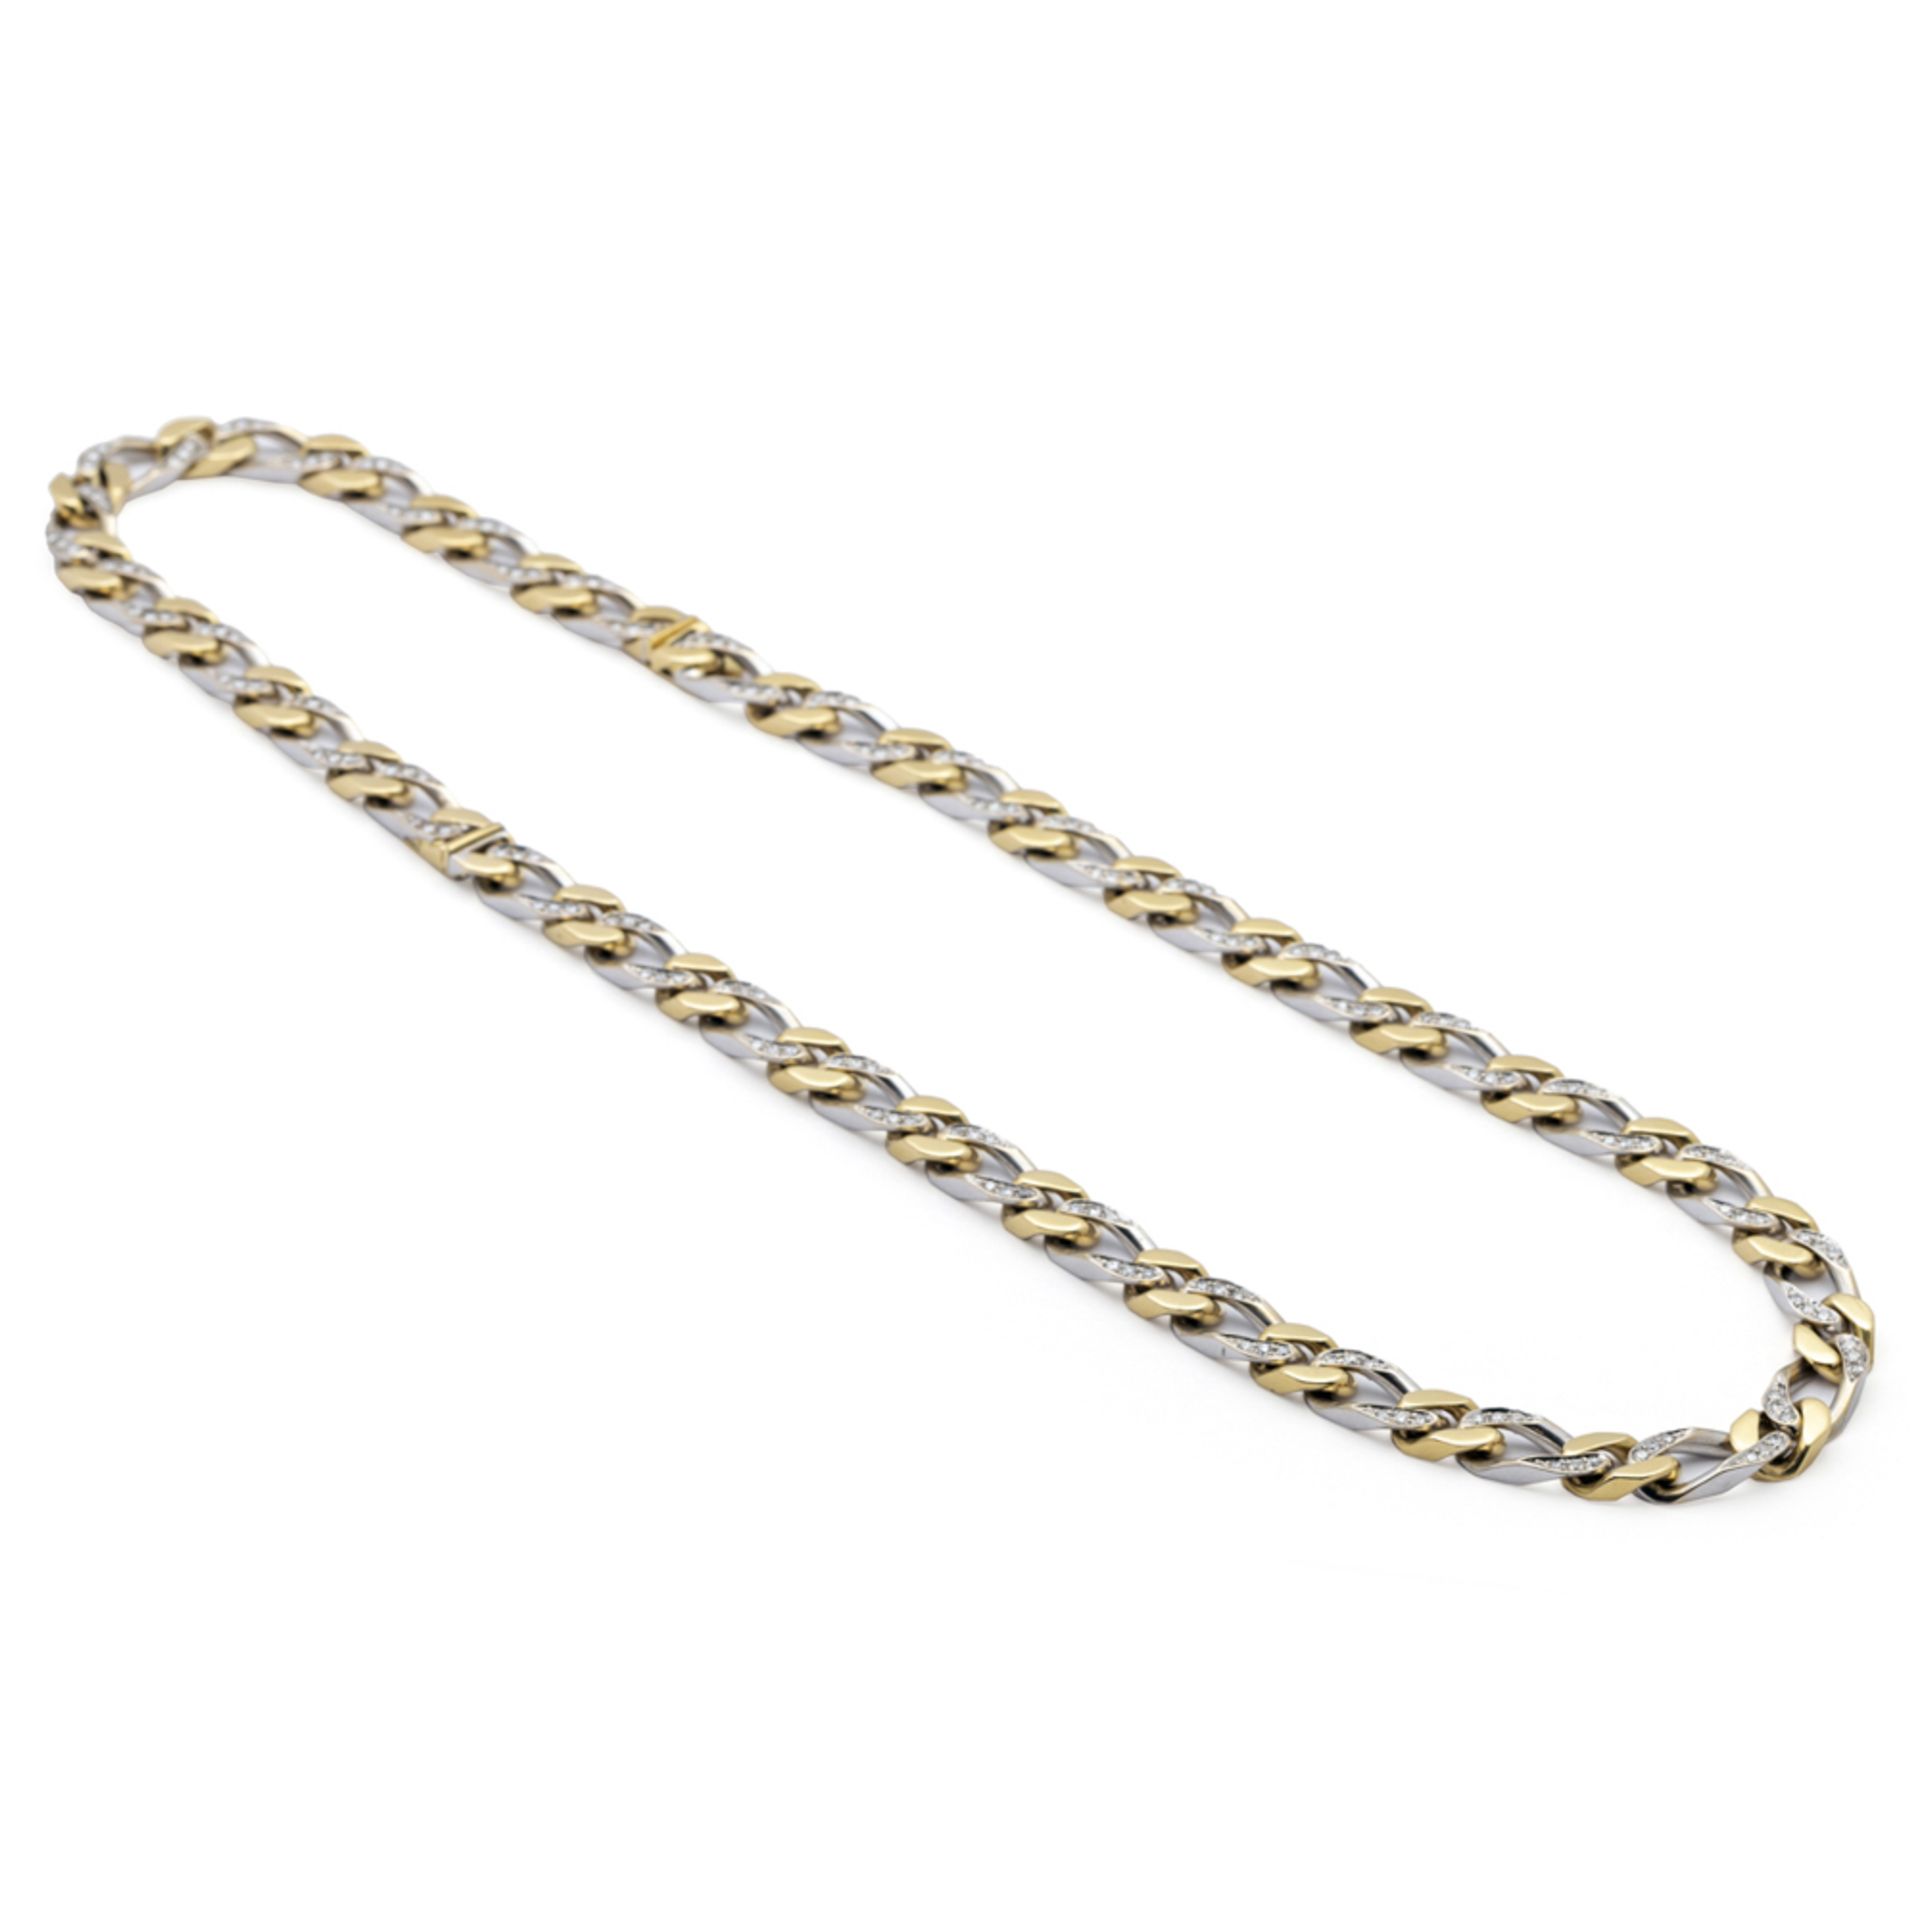 Bulgari, long groumette link necklace - Image 2 of 4